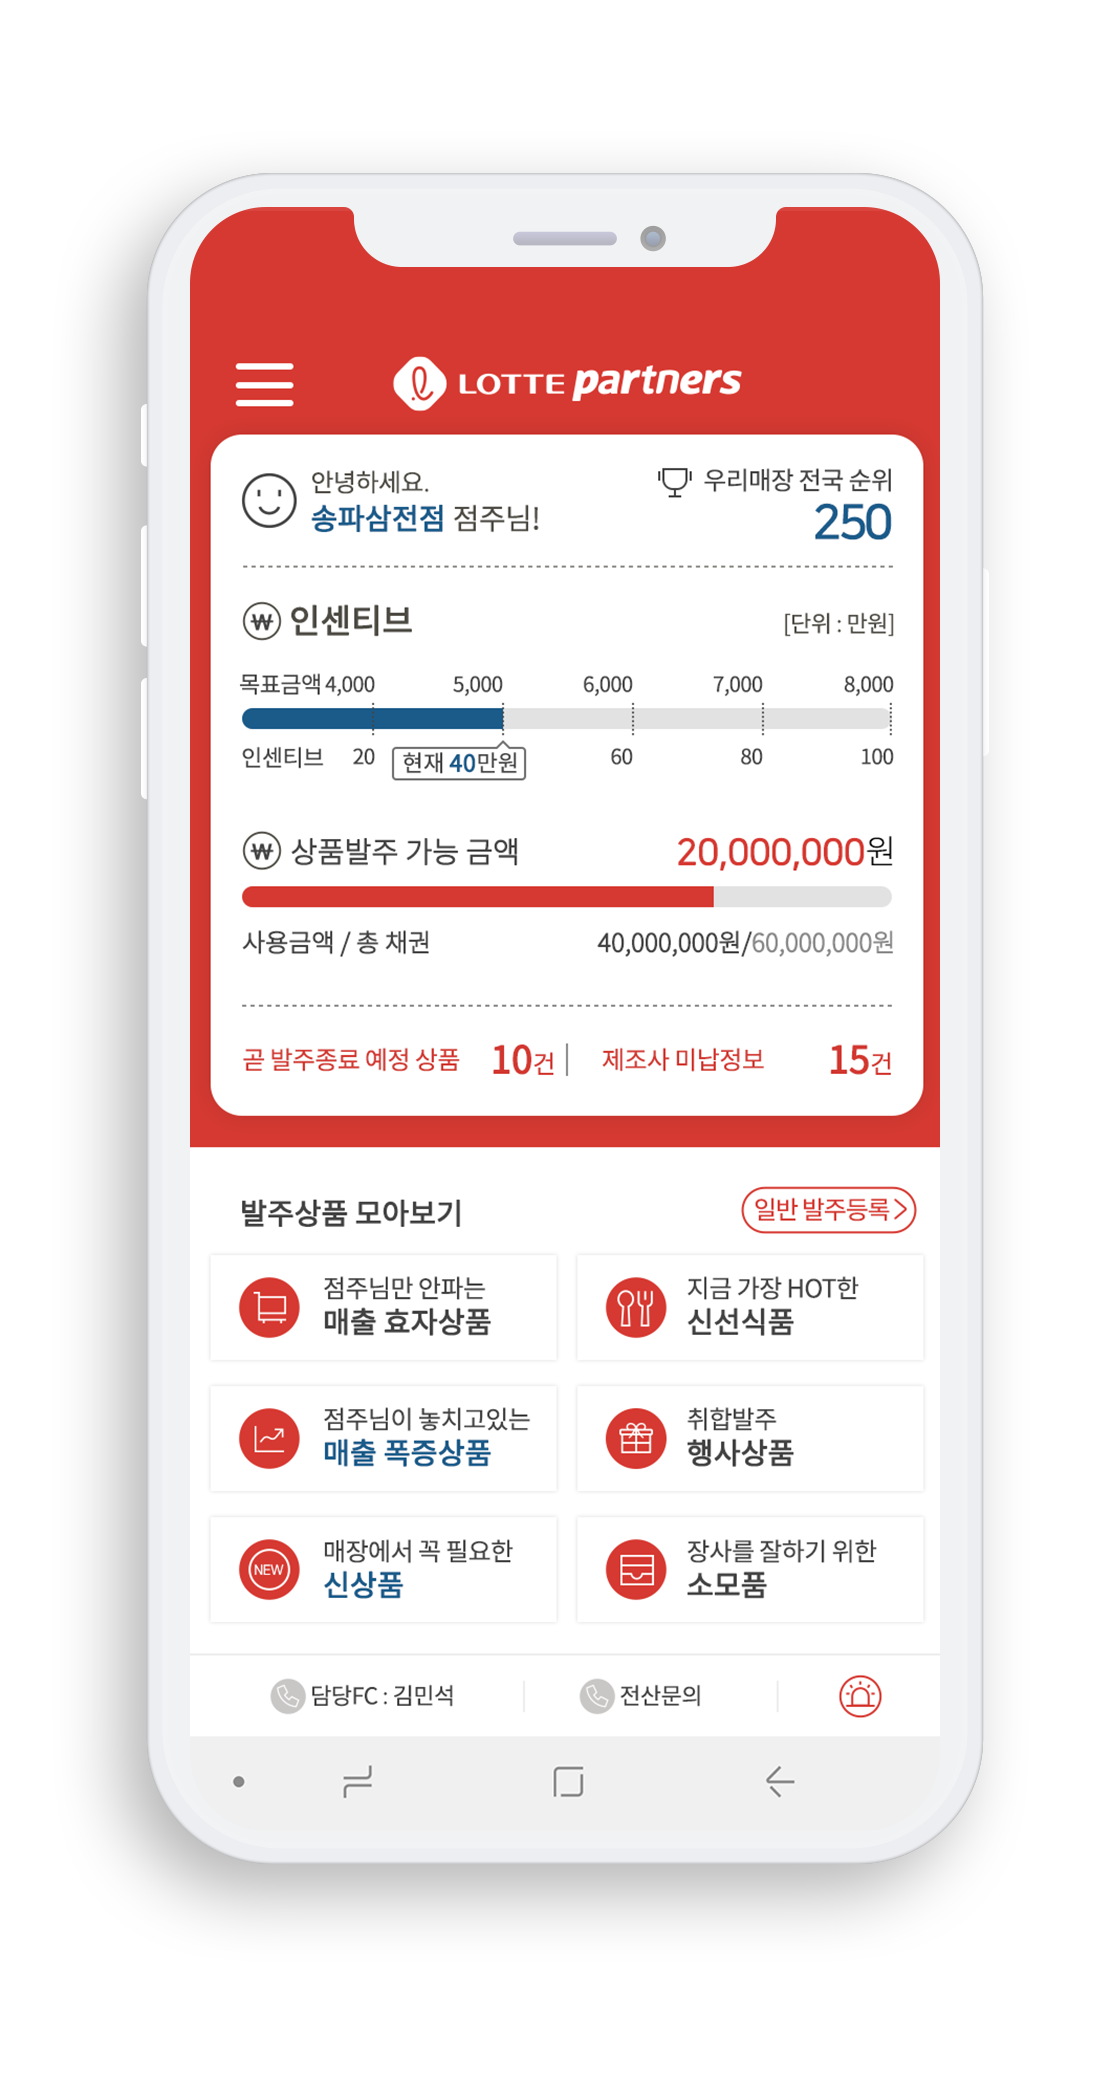 LOTTE SUPER Partners (롯데슈퍼가맹앱): Mobile App UX/UI GUI Design Mockup